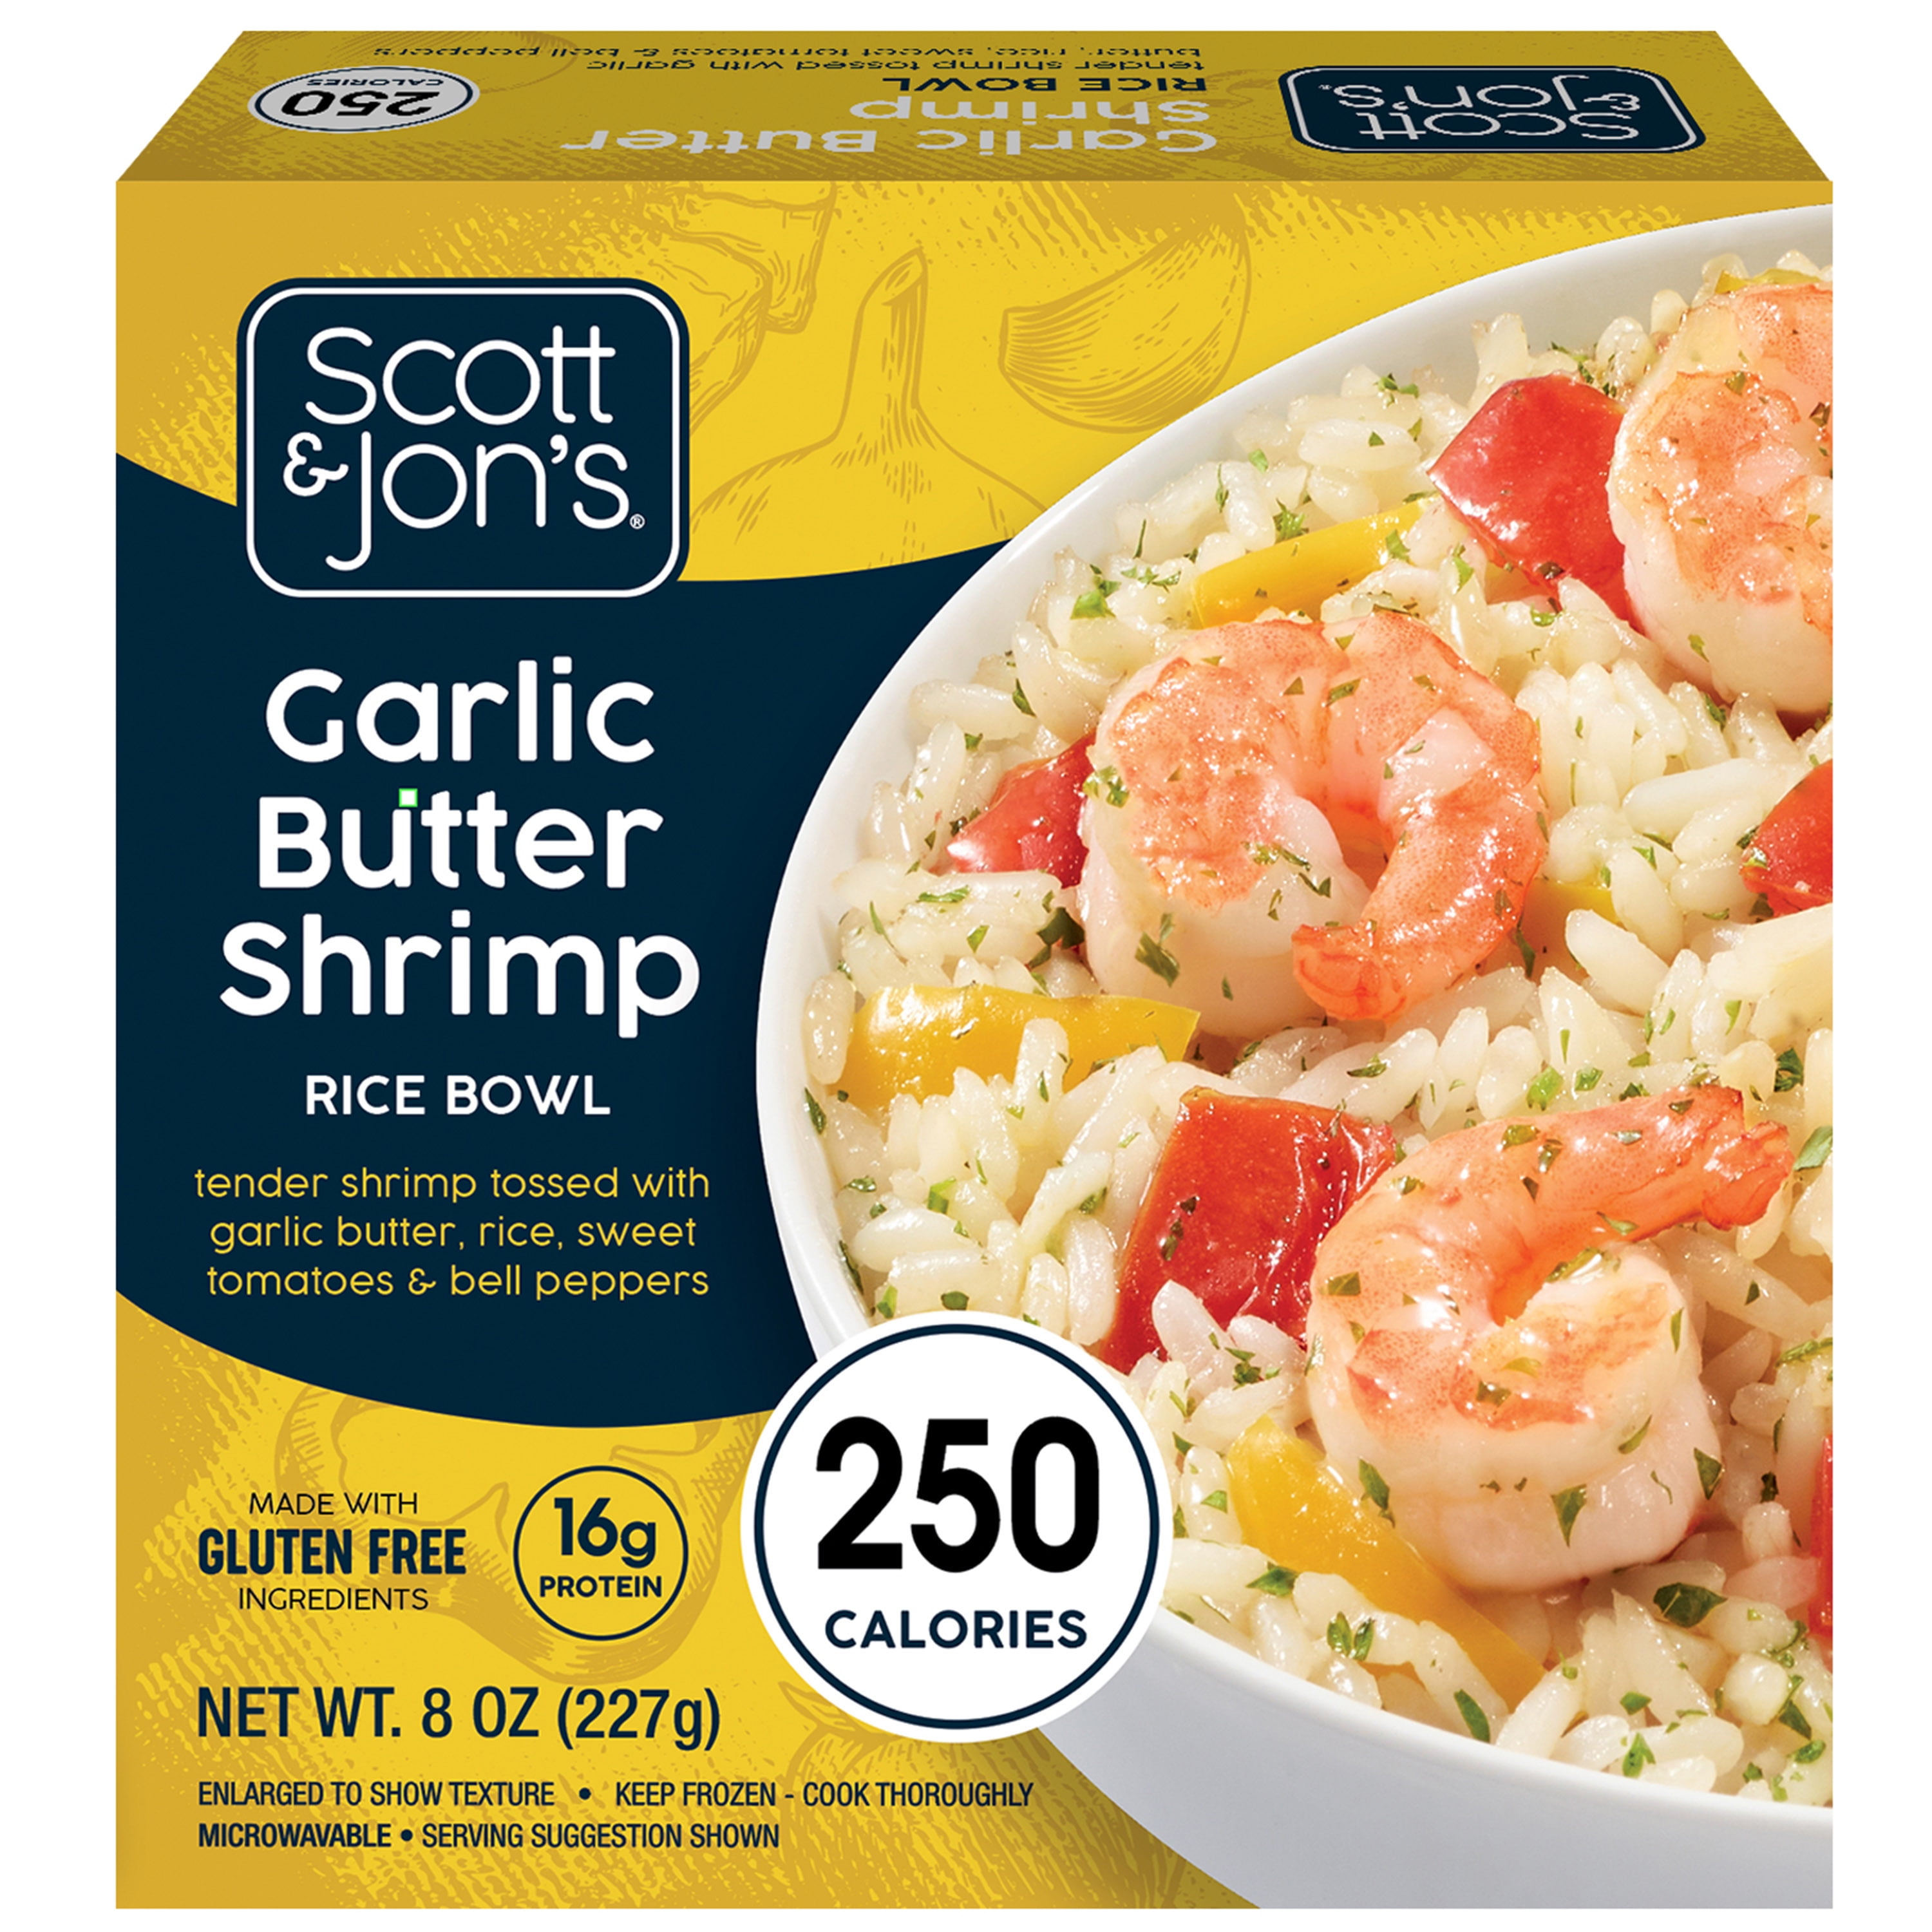 Scott & Jon's Garlic Butter Shrimp Rice Meal, 8 oz, (Frozen)